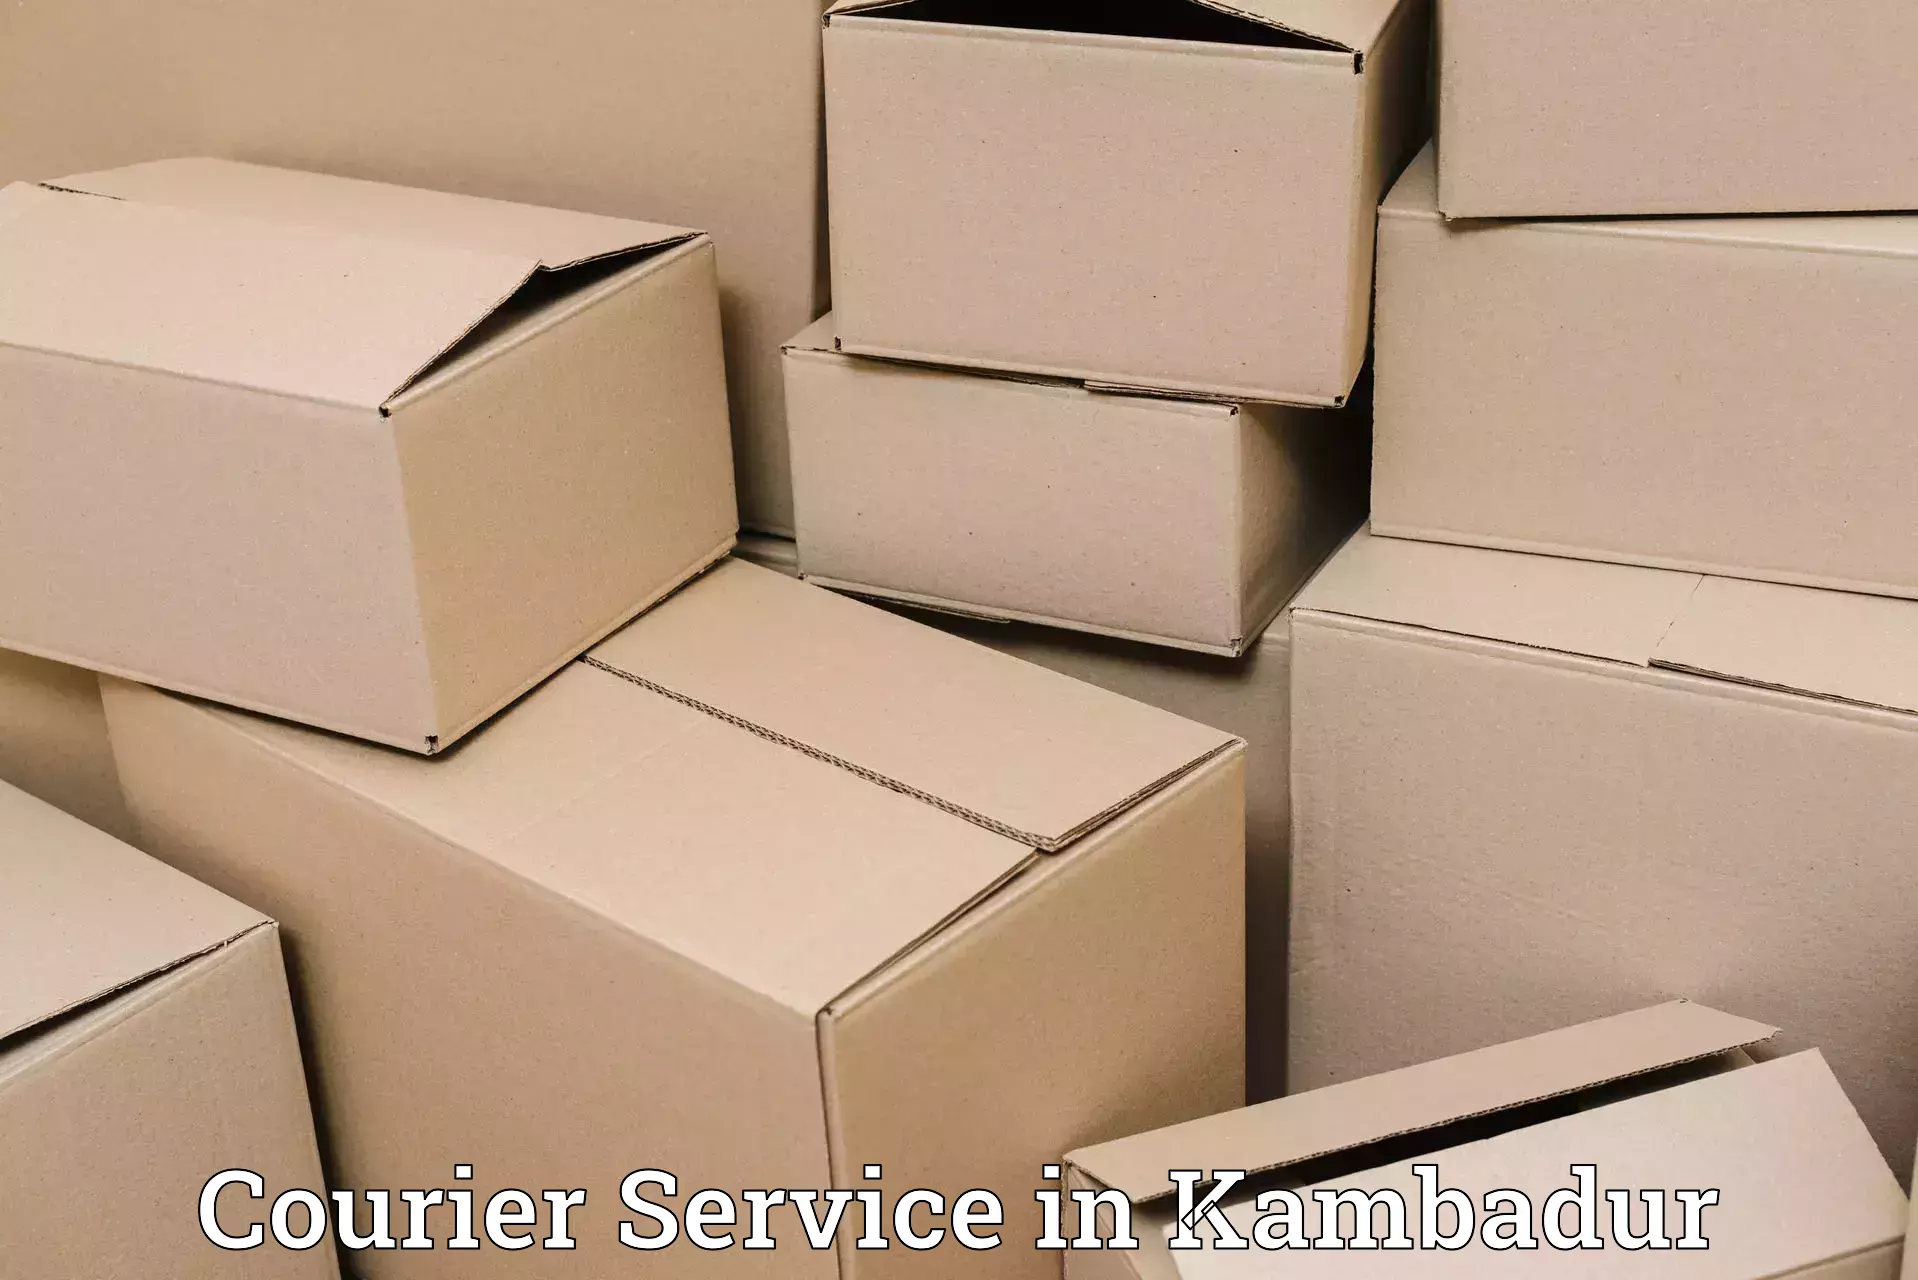 Professional parcel services in Kambadur